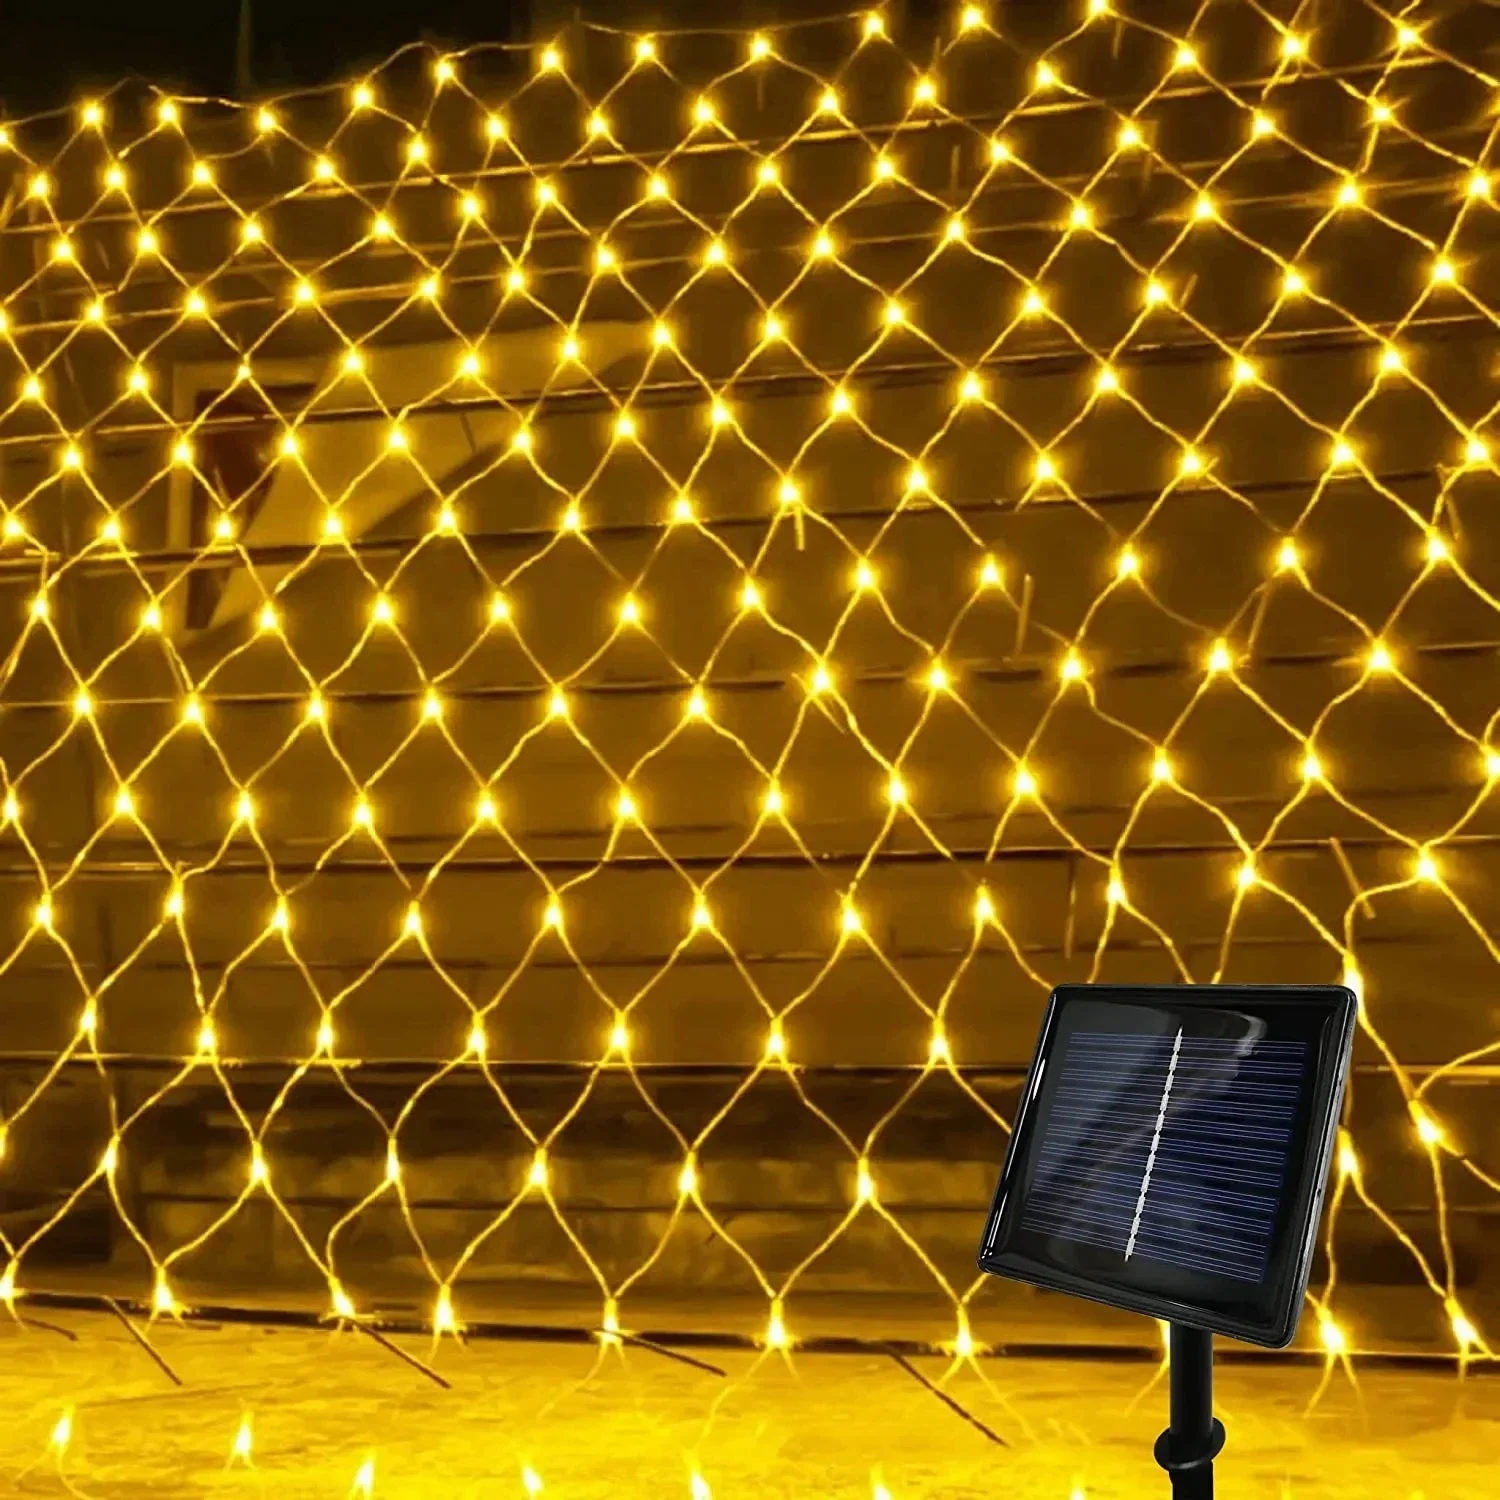 

3x2m LED Solar String Net Mesh Light 8 Modes Waterproof Outdoor Garland Lamp for Christmas Party Patio Backyard Garden Decor